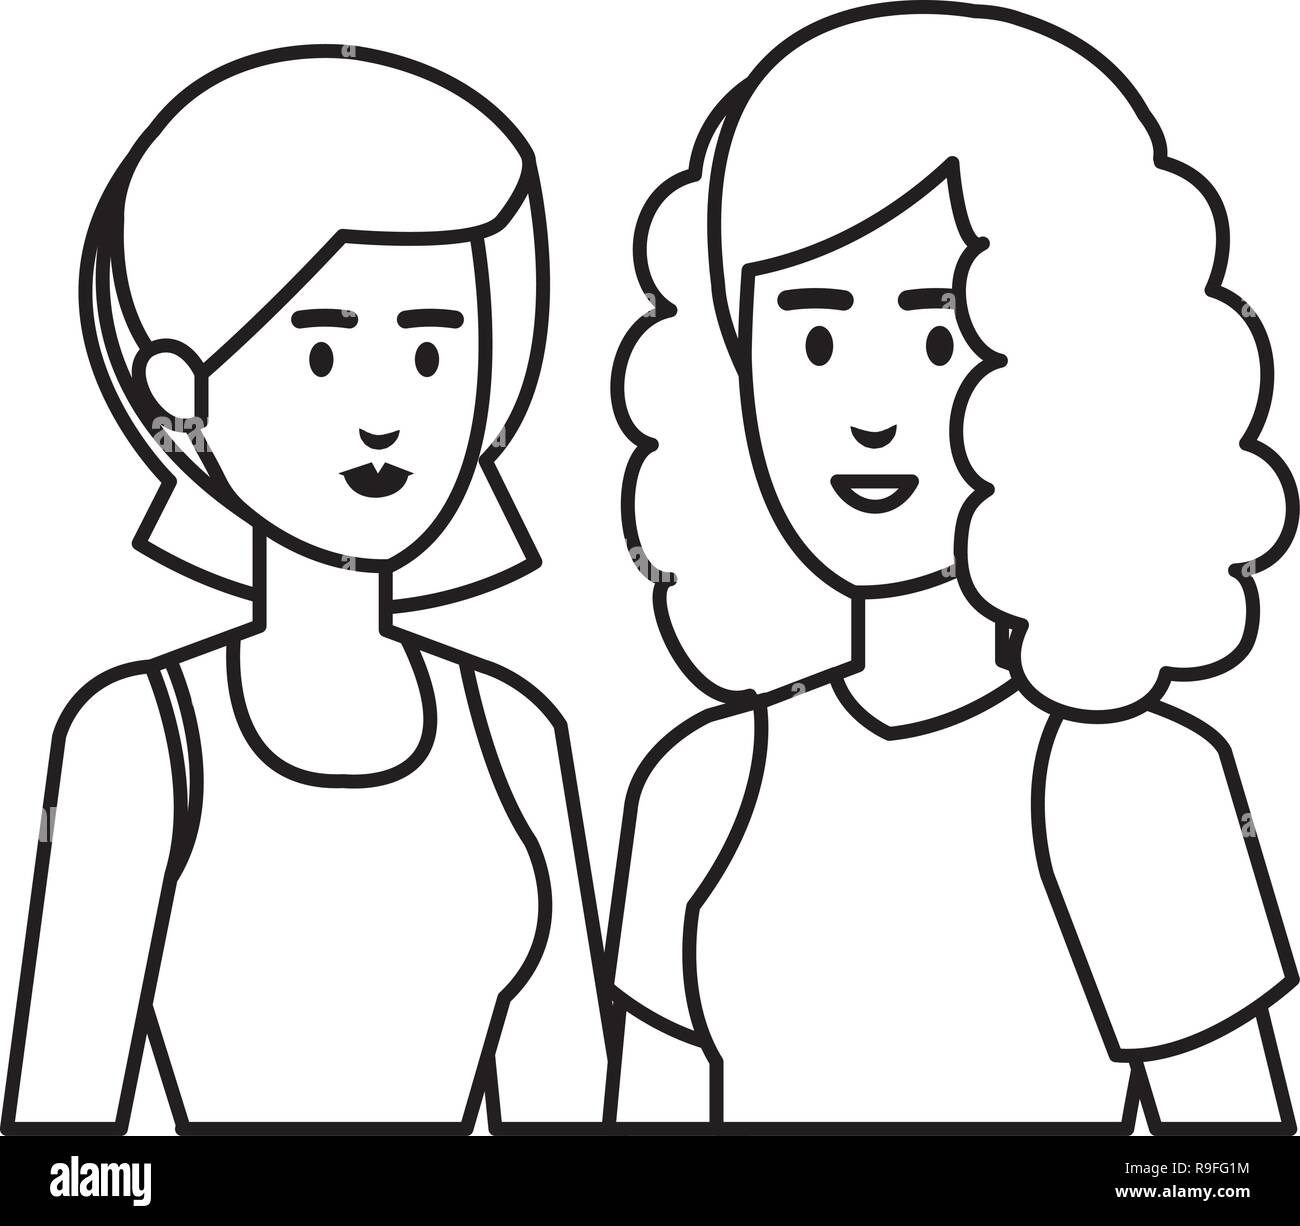 Couple Of Women Characters Stock Vector Image And Art Alamy 